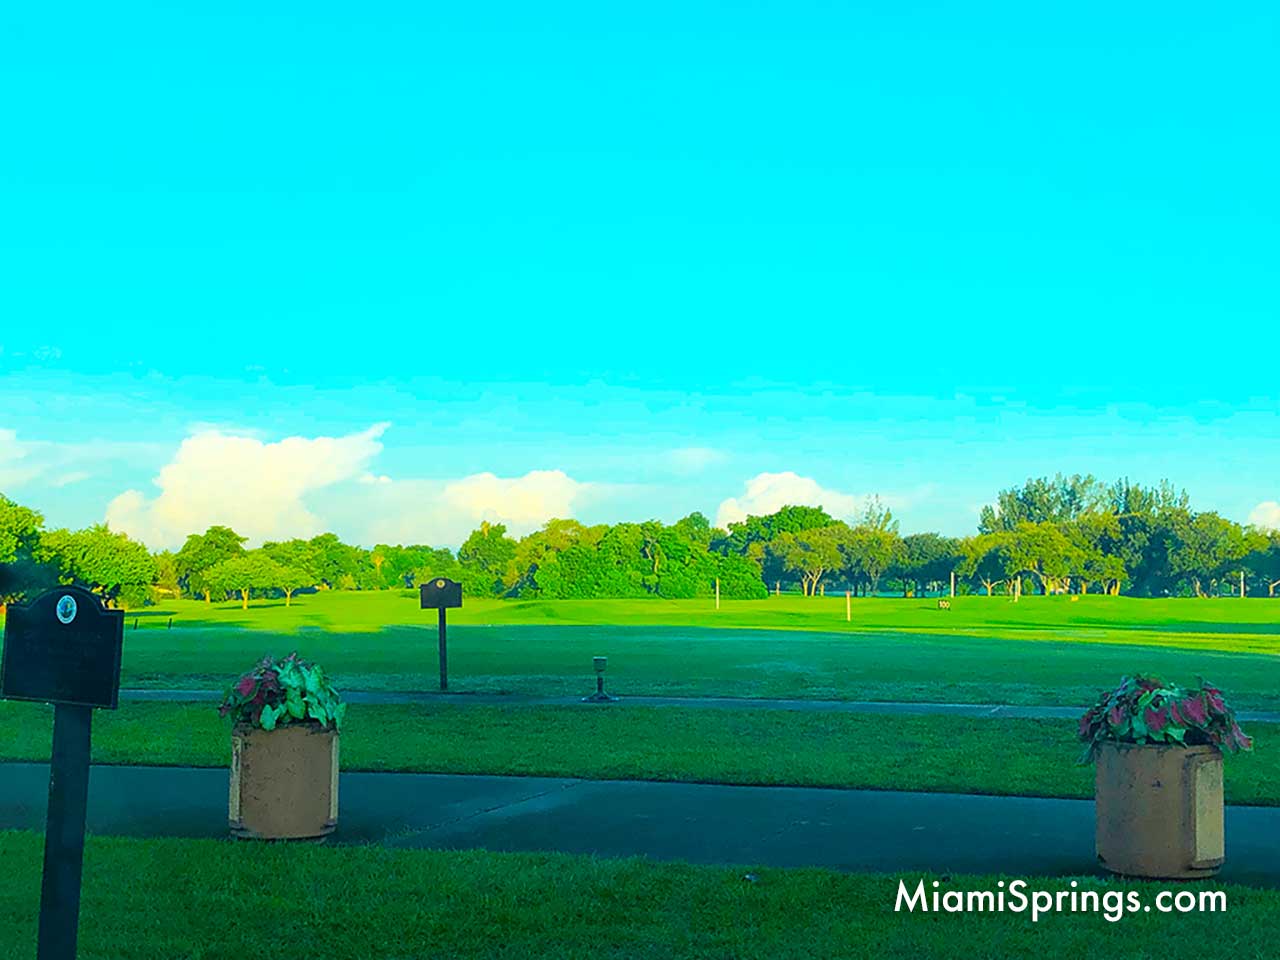 Miami Springs Golf Course (Copyright MiamiSprings.com)